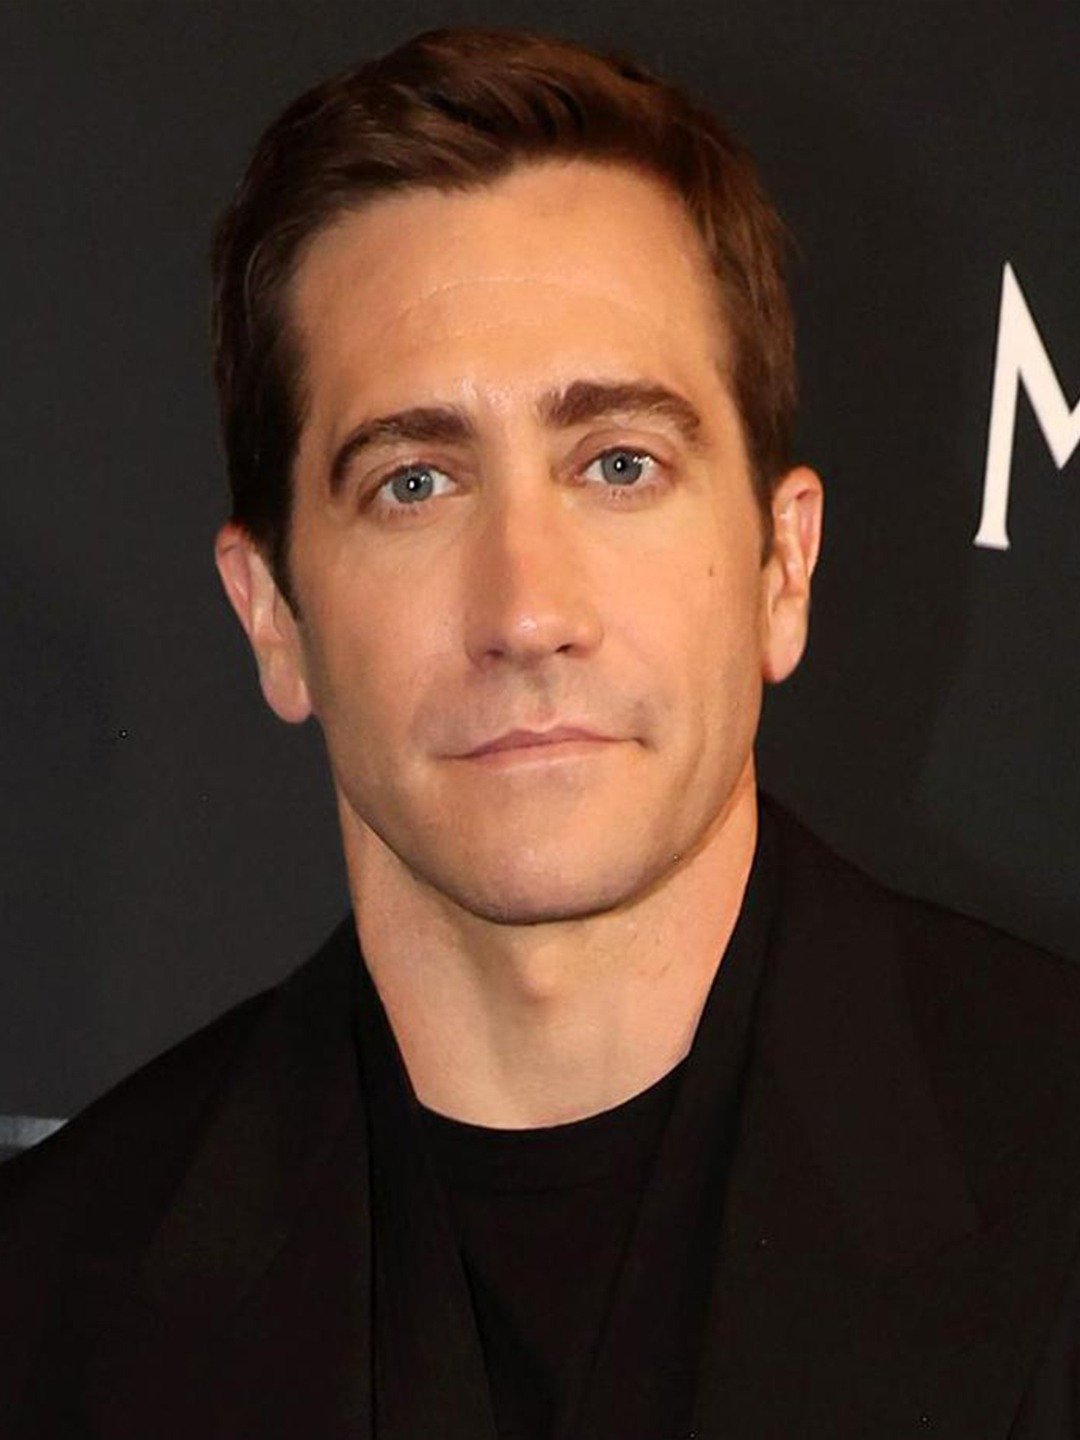 Jake Gyllenhaal - Actor